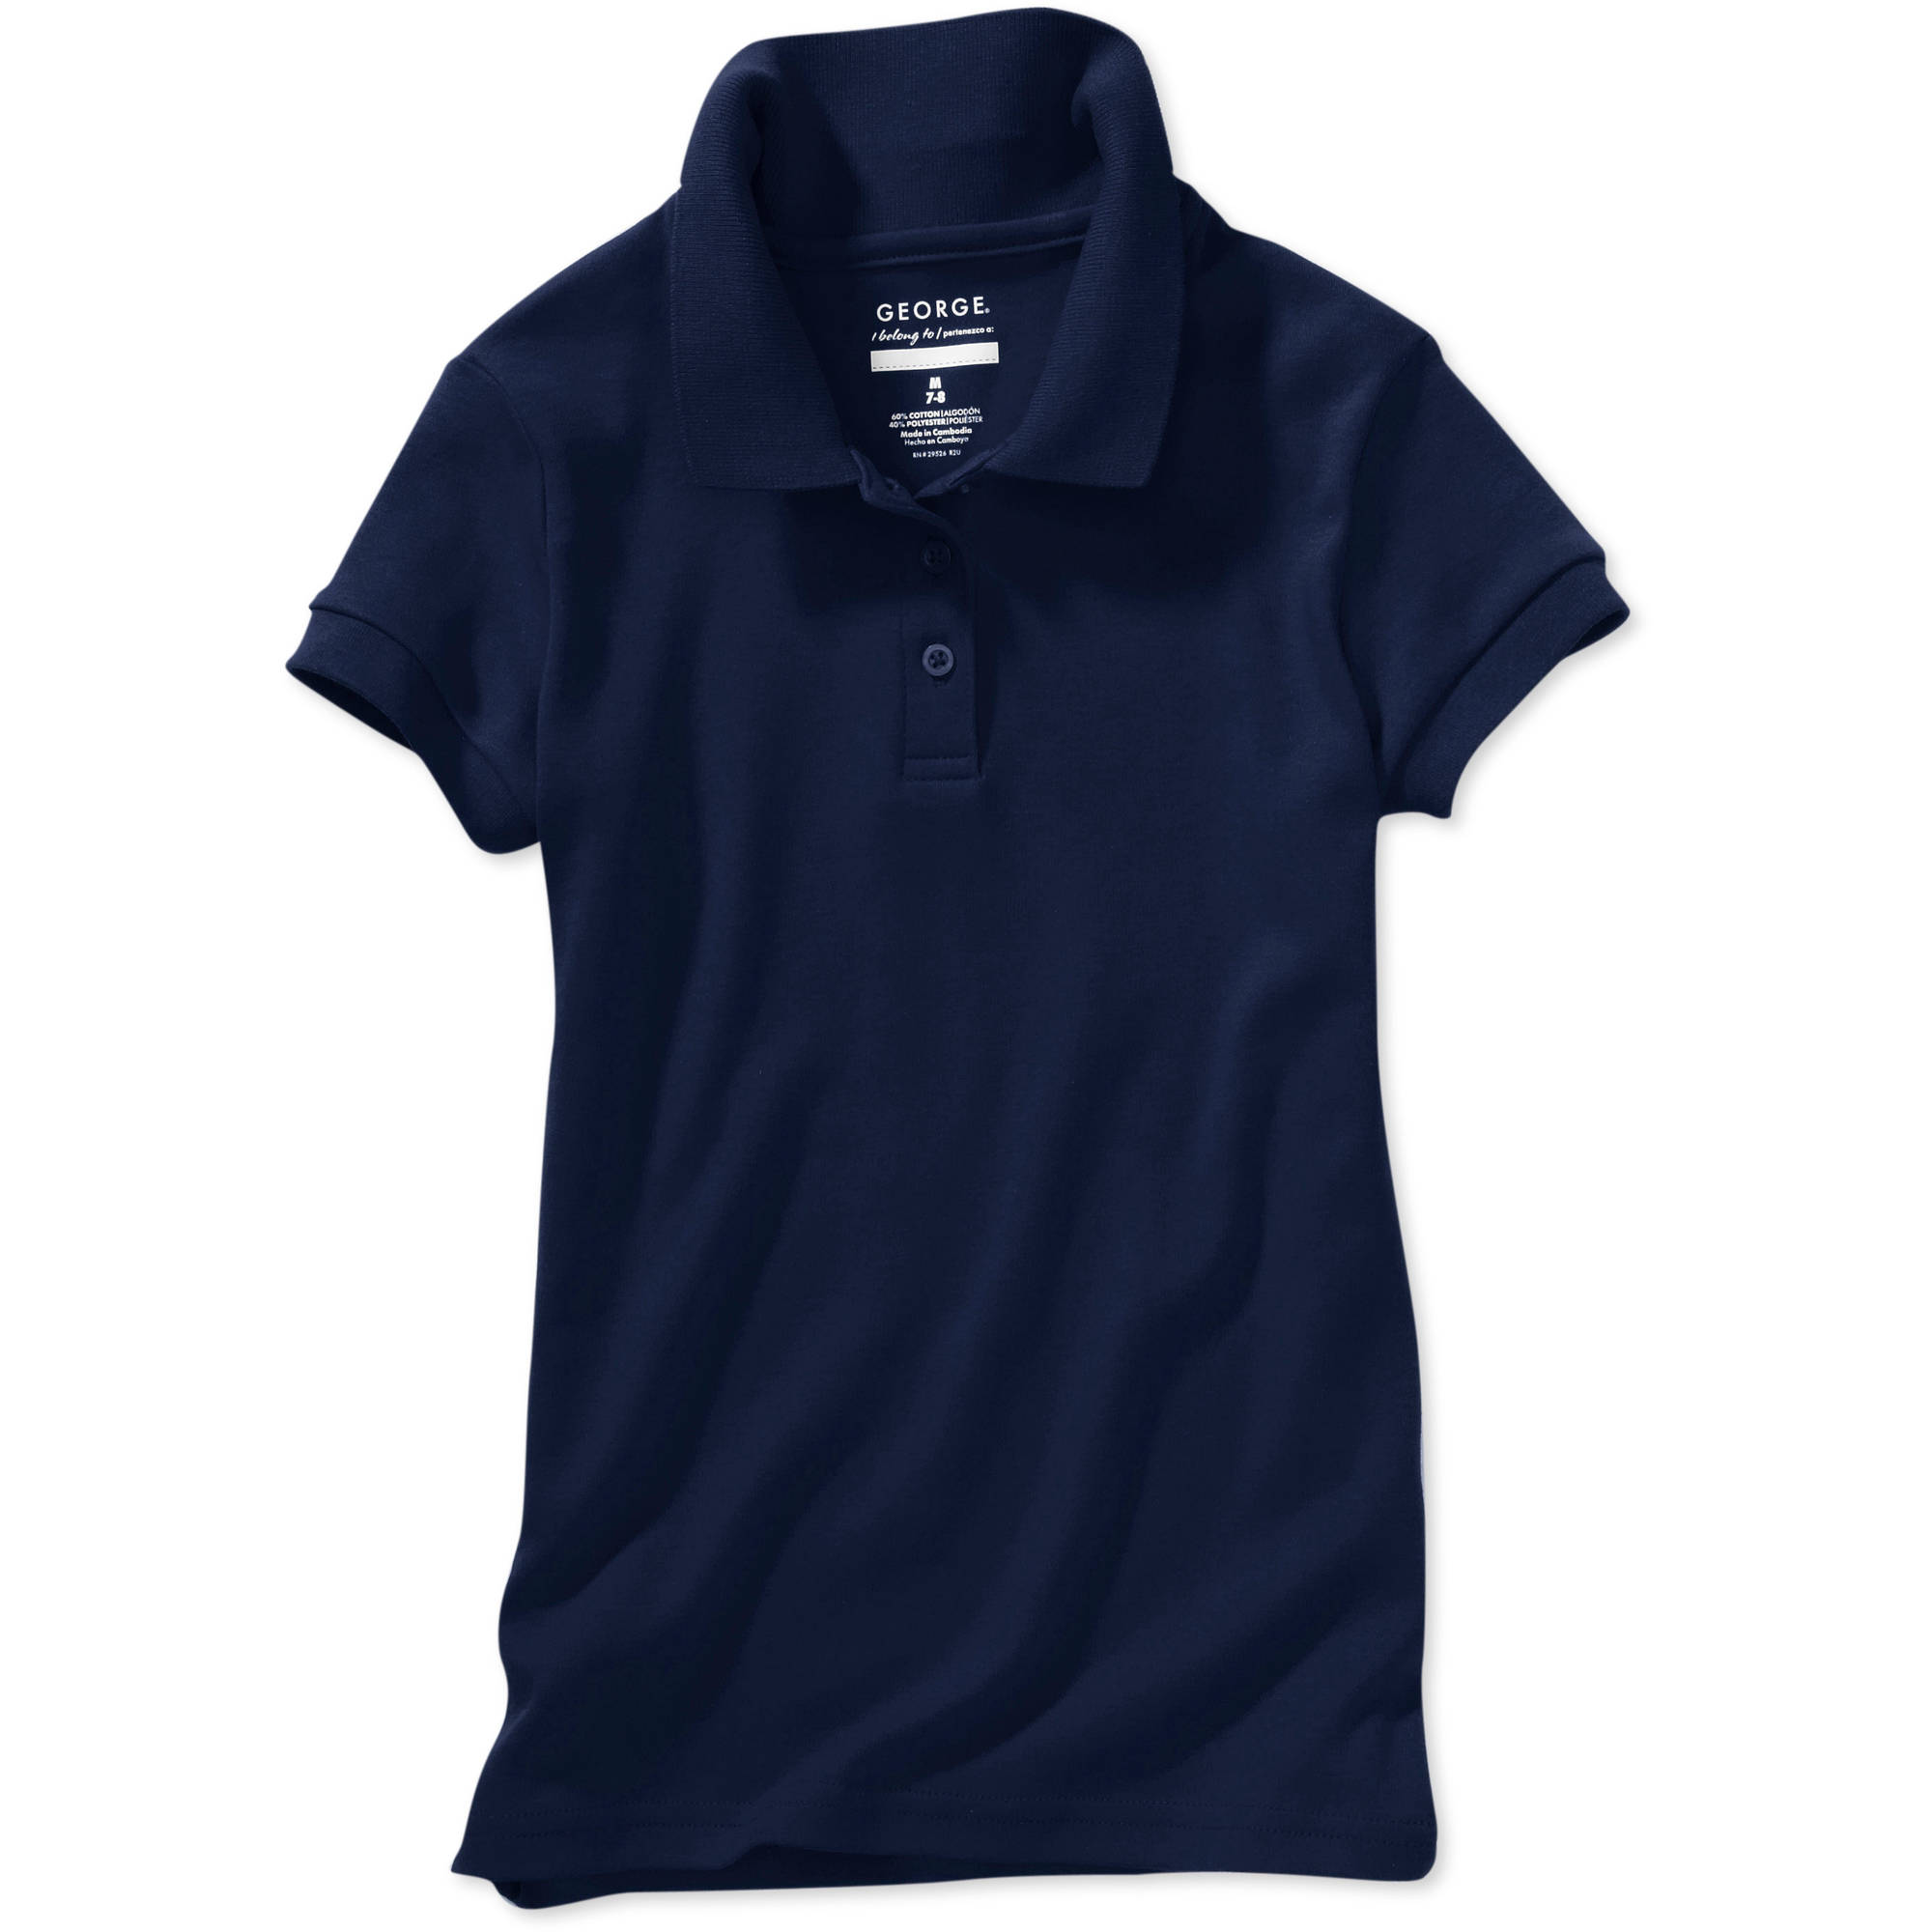 George Girls School Uniform Short Sleeve Polo Shirt with Scotchgard (Little Girls & Big Girls) - image 1 of 1